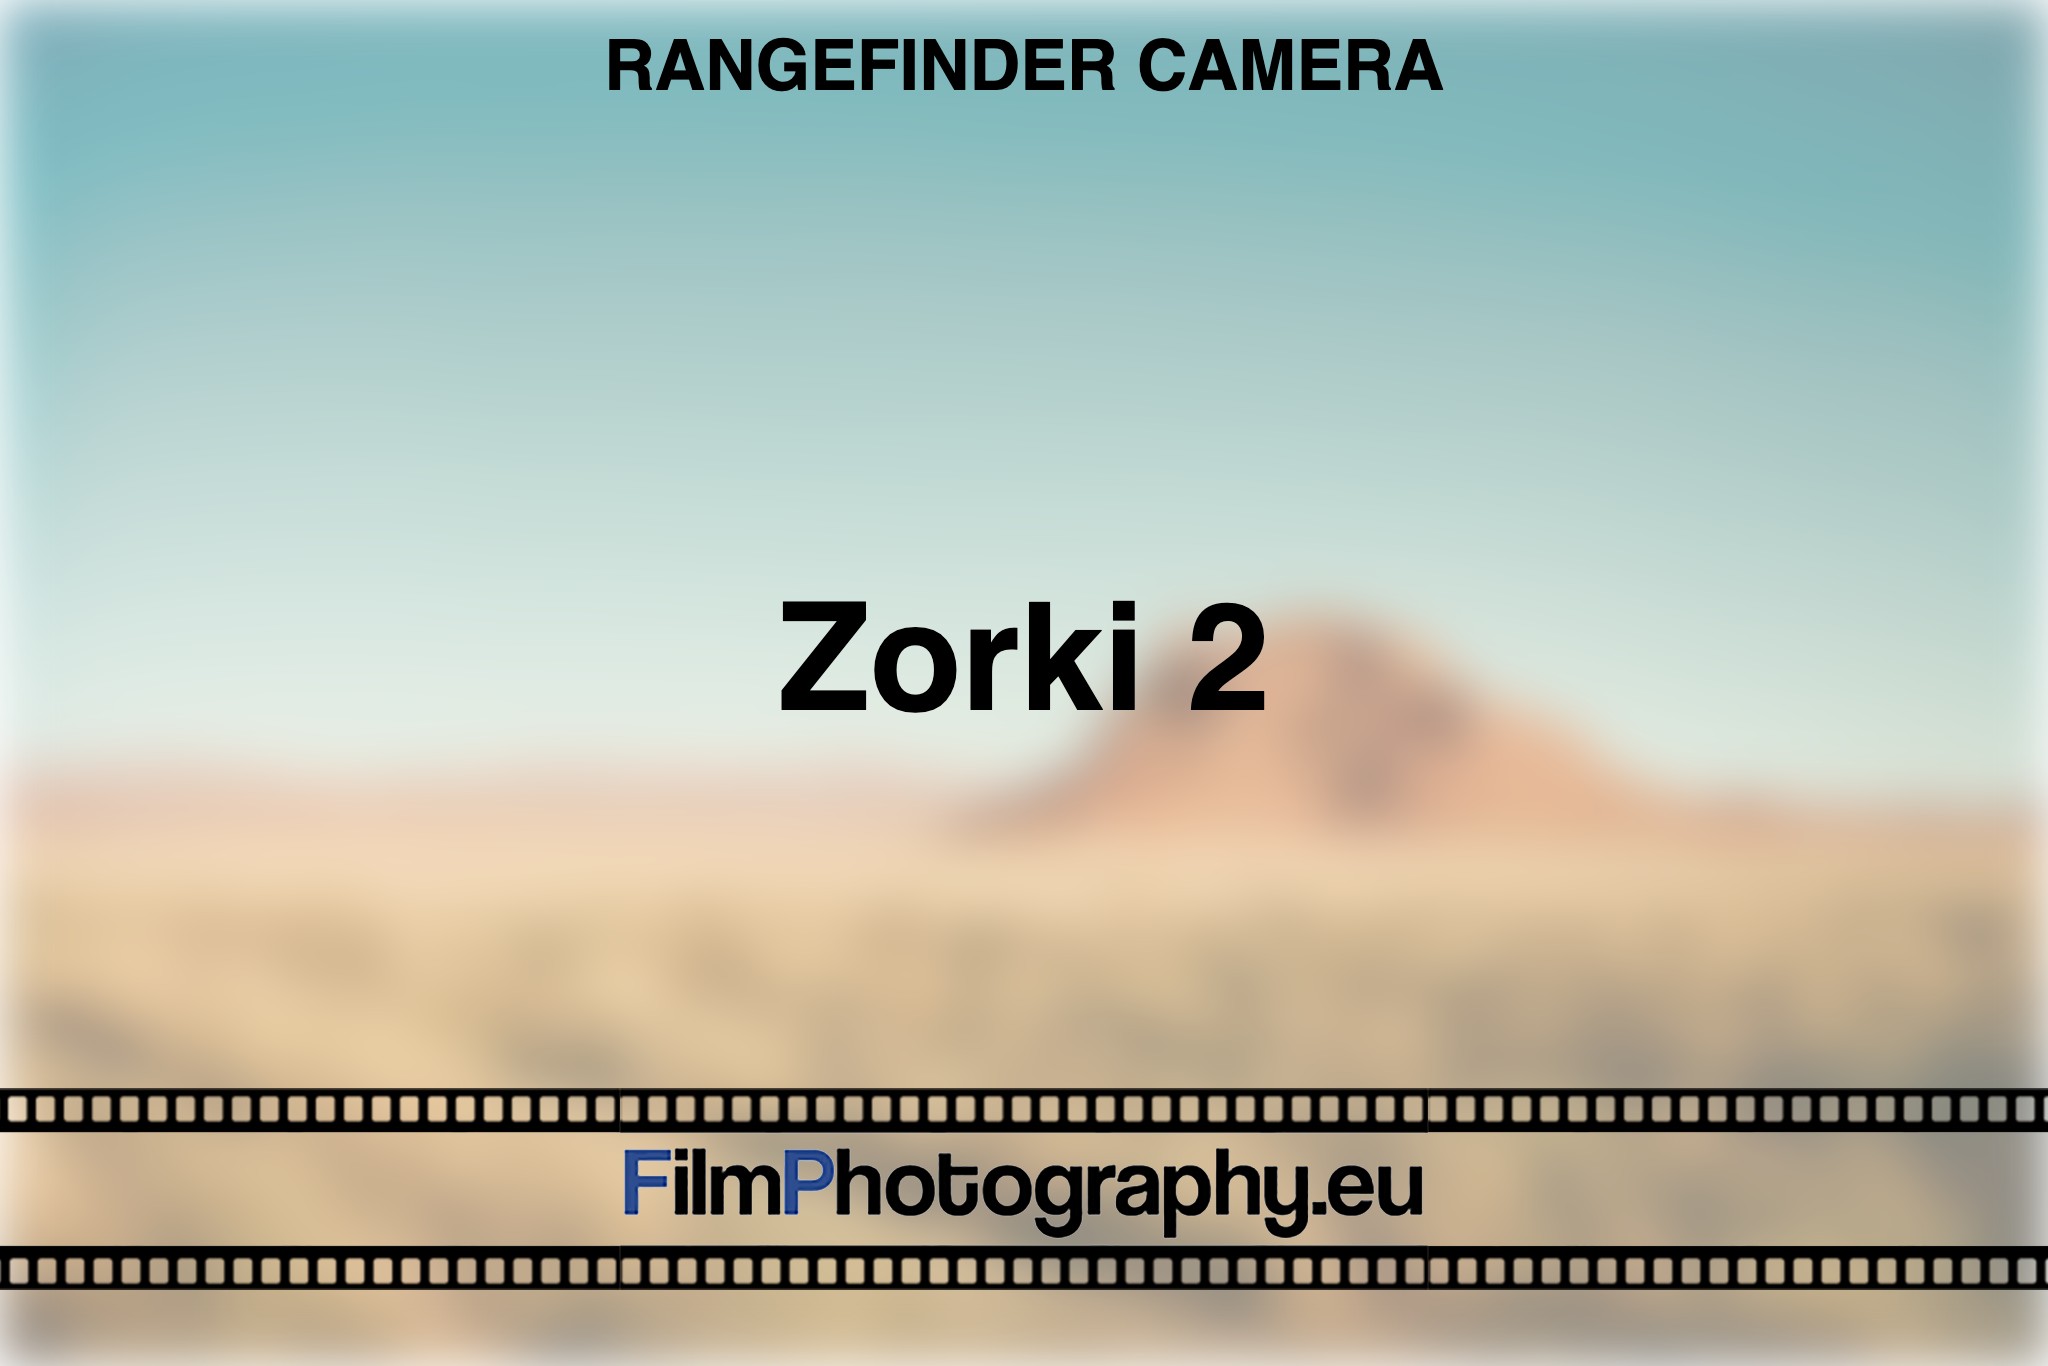 zorki-2-rangefinder-camera-bnv